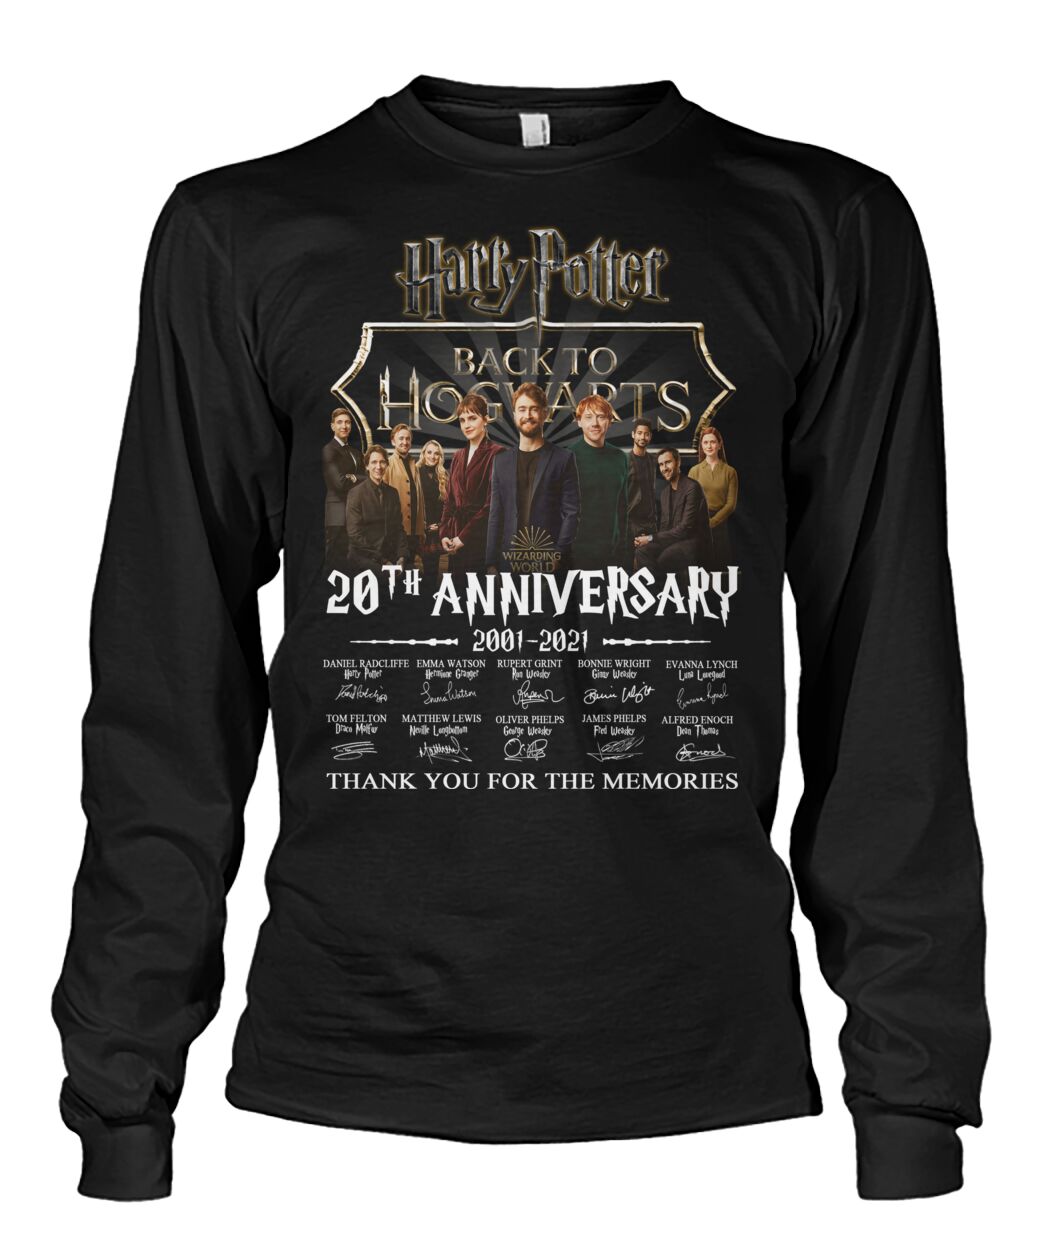 Harry Potter Back to Hogwarts 20th Anniversary 2001-2021 shirt, hoodie 7